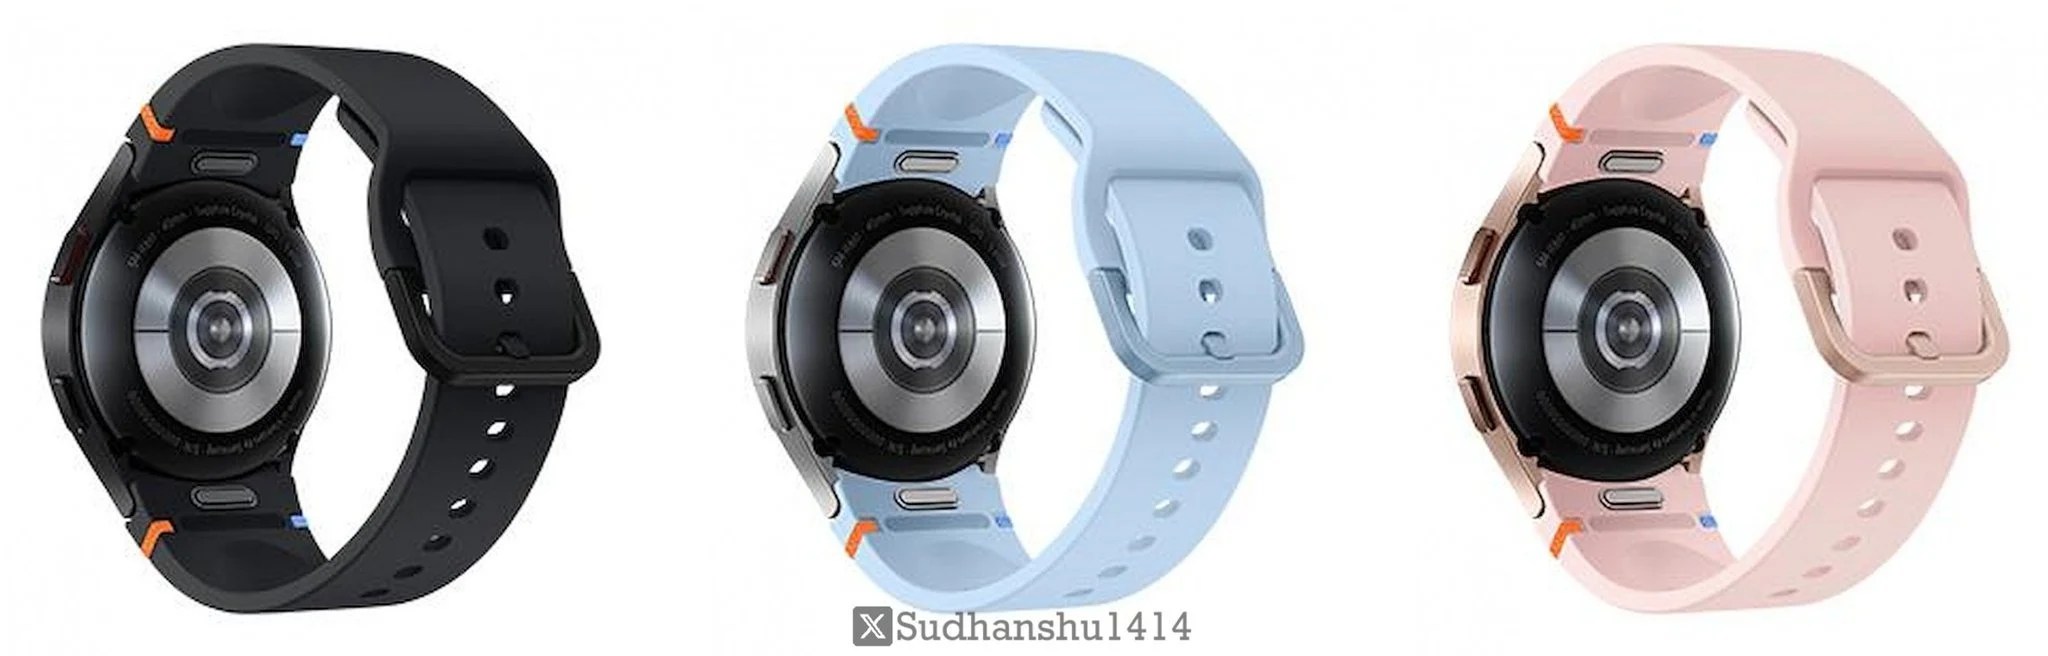 Samsung Galaxy Watch FE // Source : Sudhanshu Ambhore